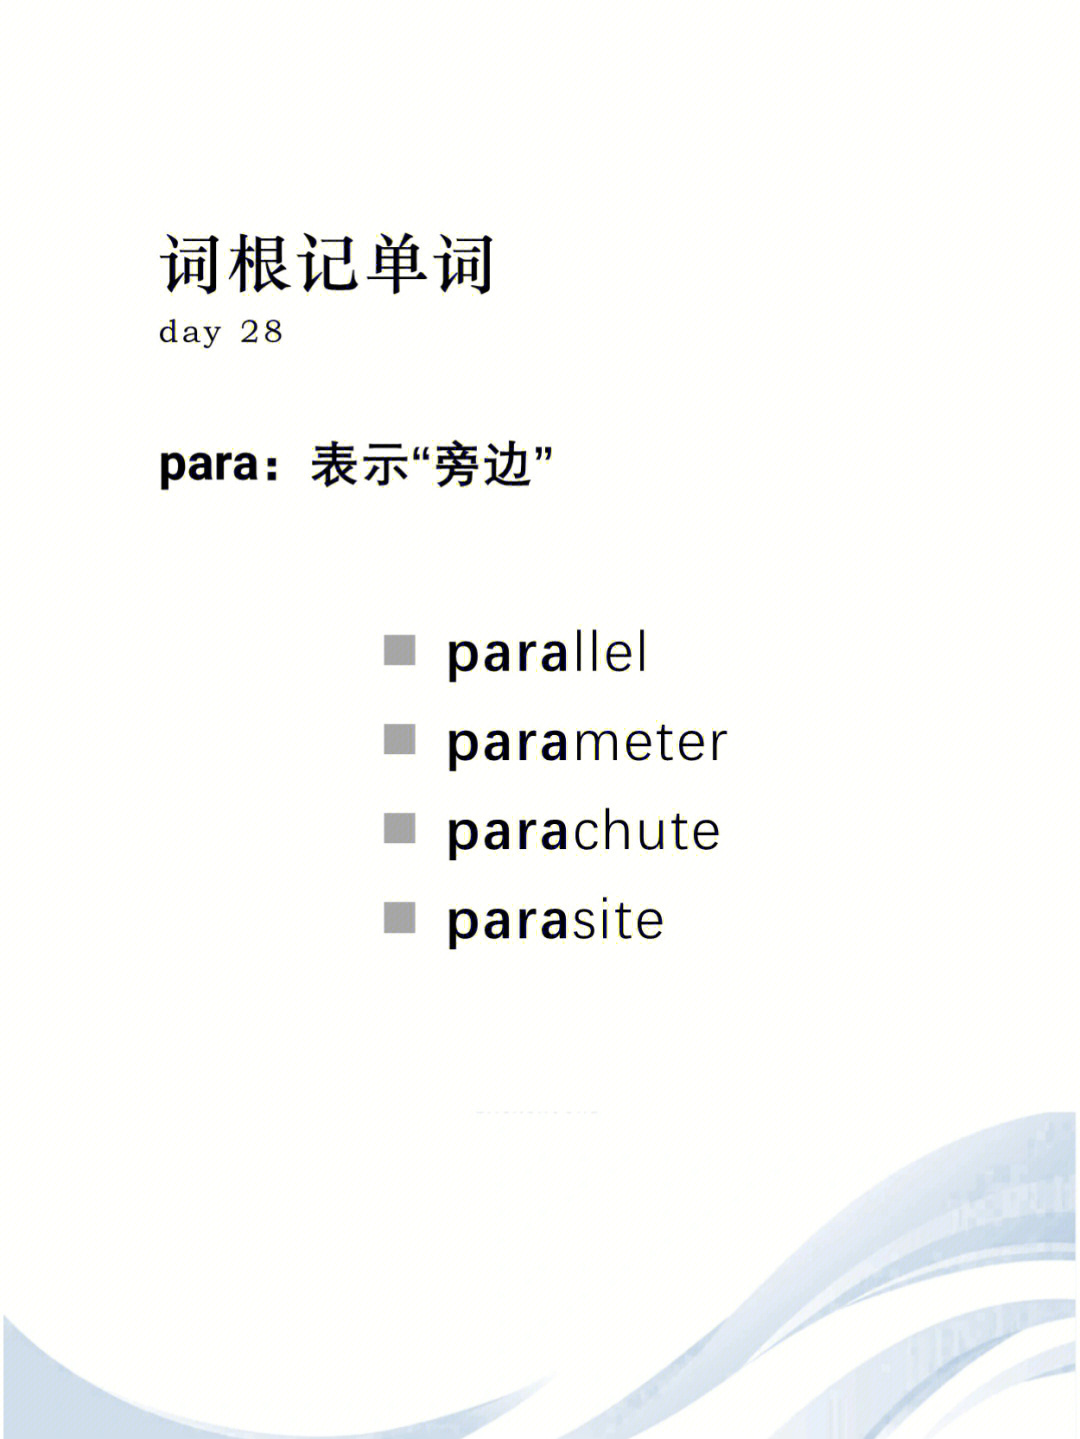 parameter8215parachute8215parasite